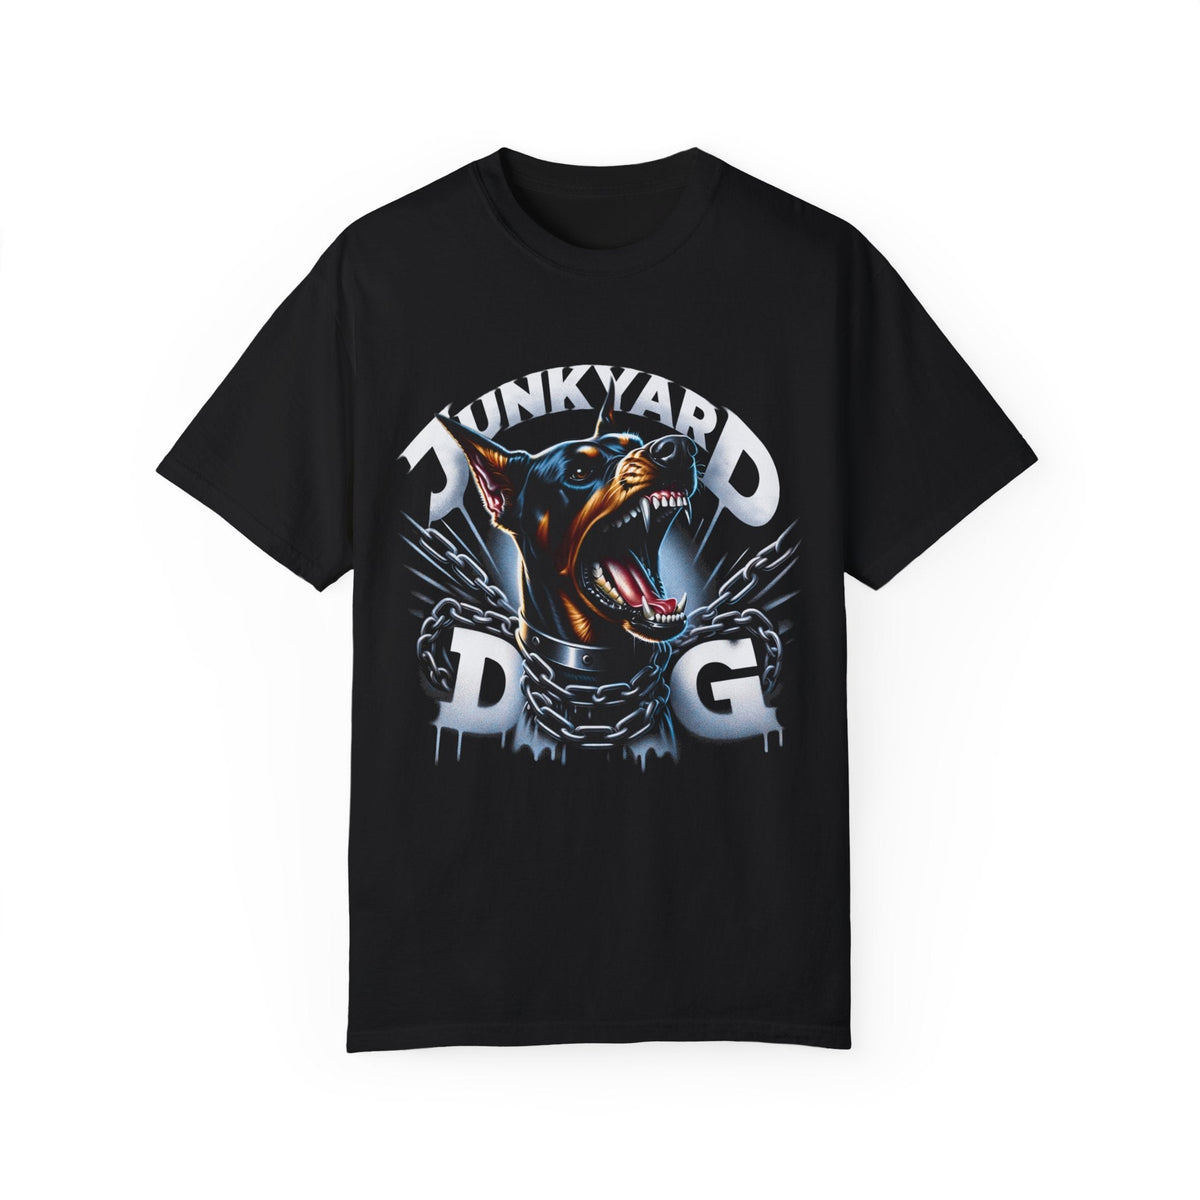 Junkyard Dog Unisex T - shirt - Goth Cloth Co.T - Shirt17736346067953706043